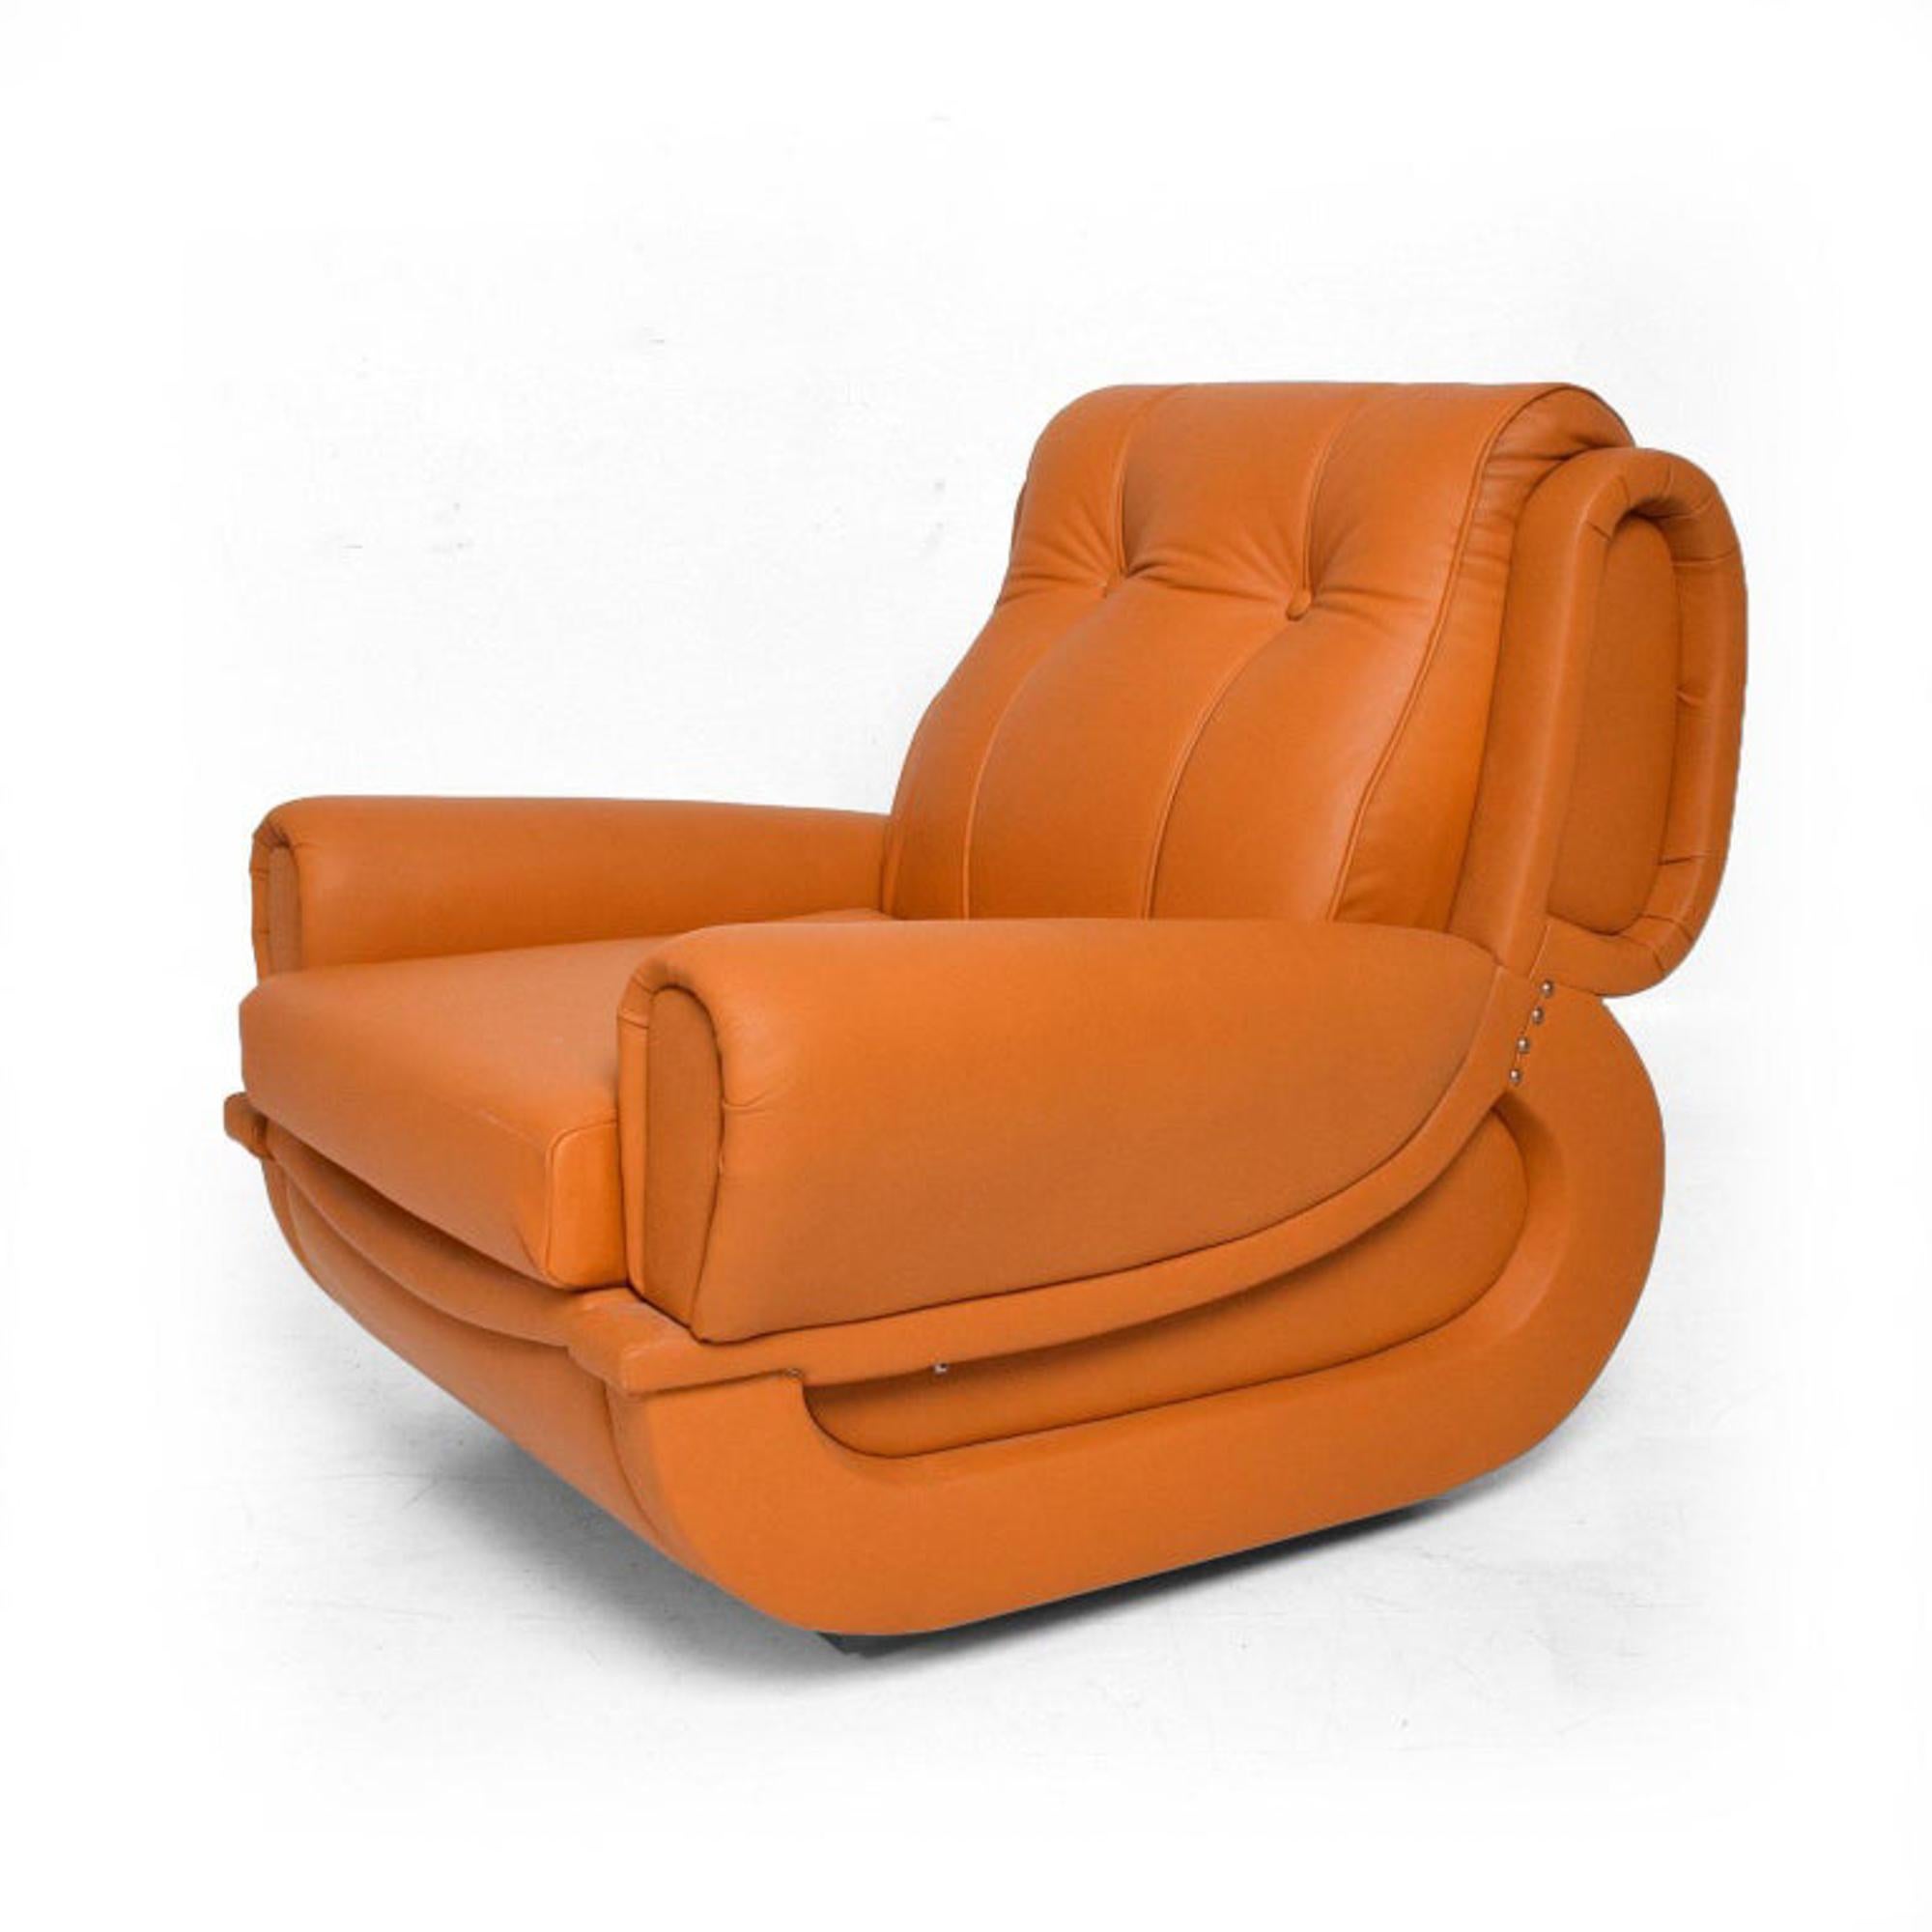 1960s Munari Italian Leather Lounge Chairs Restored For Sale 3